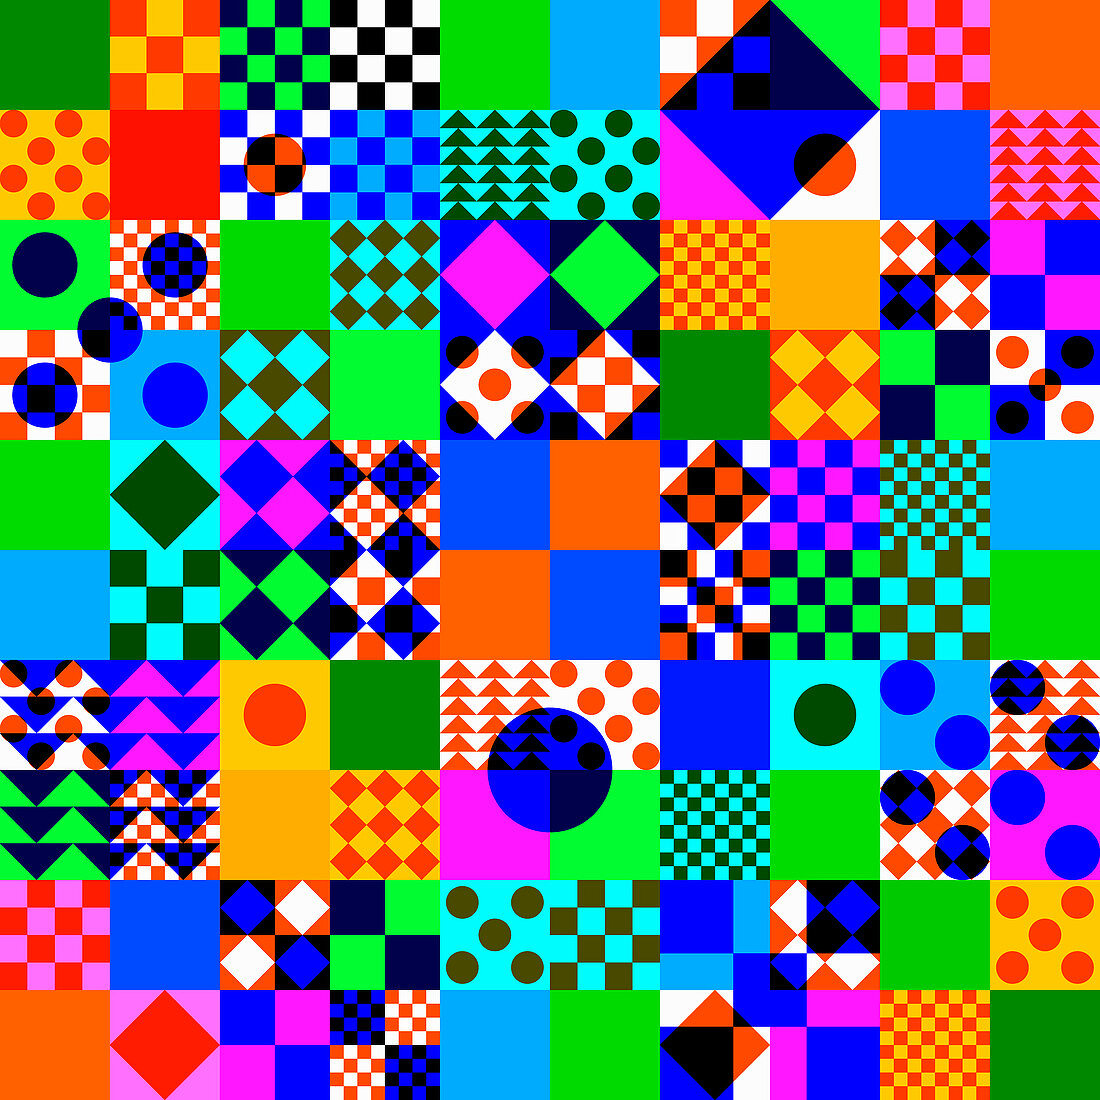 Pattern of geometric shapes, illustration